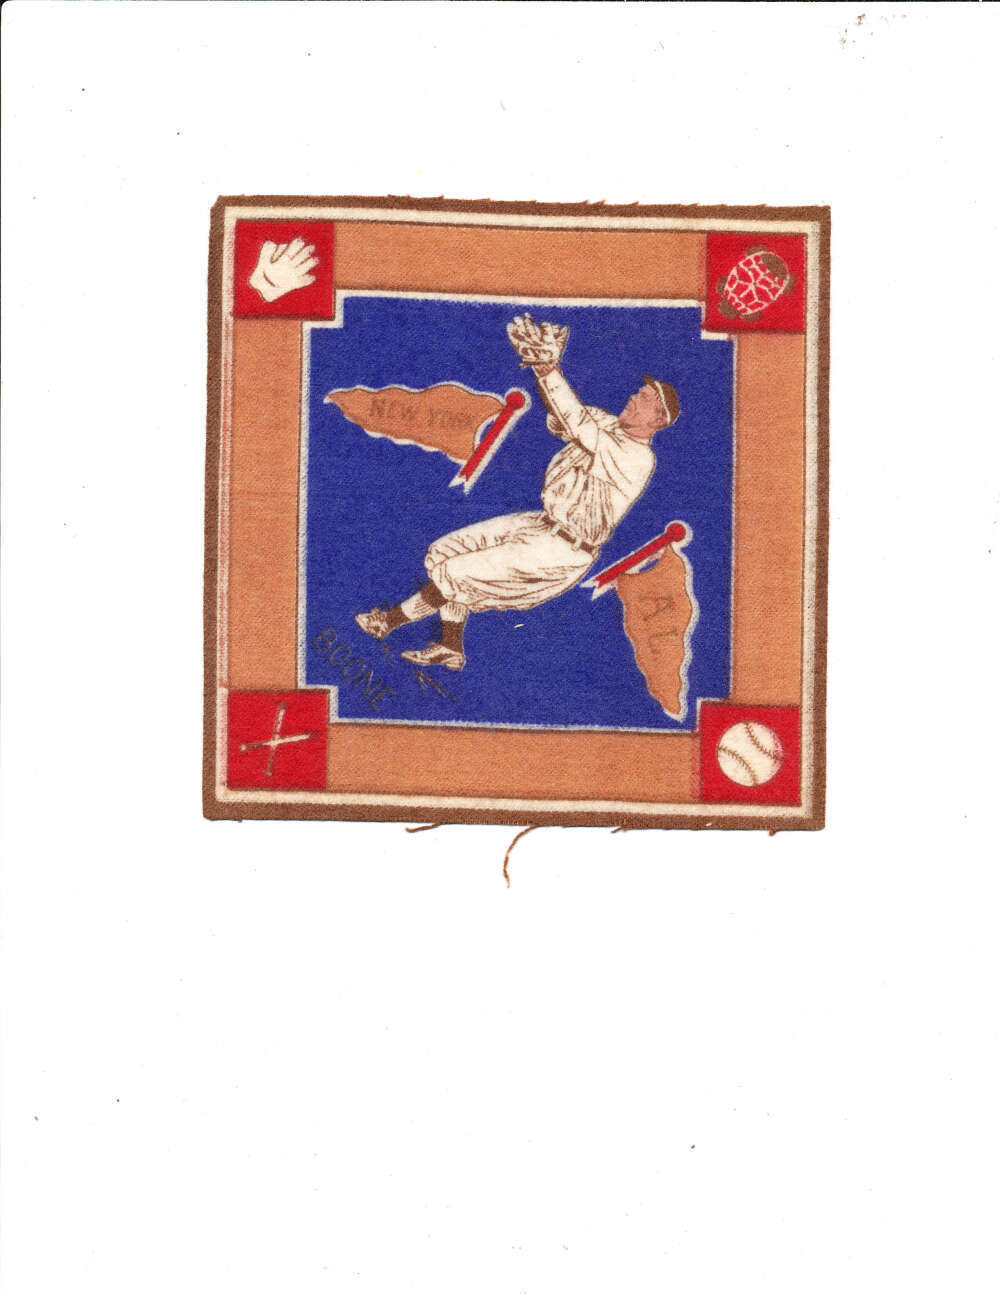 1914 b18 blanket Boone New York Yankees em bxm